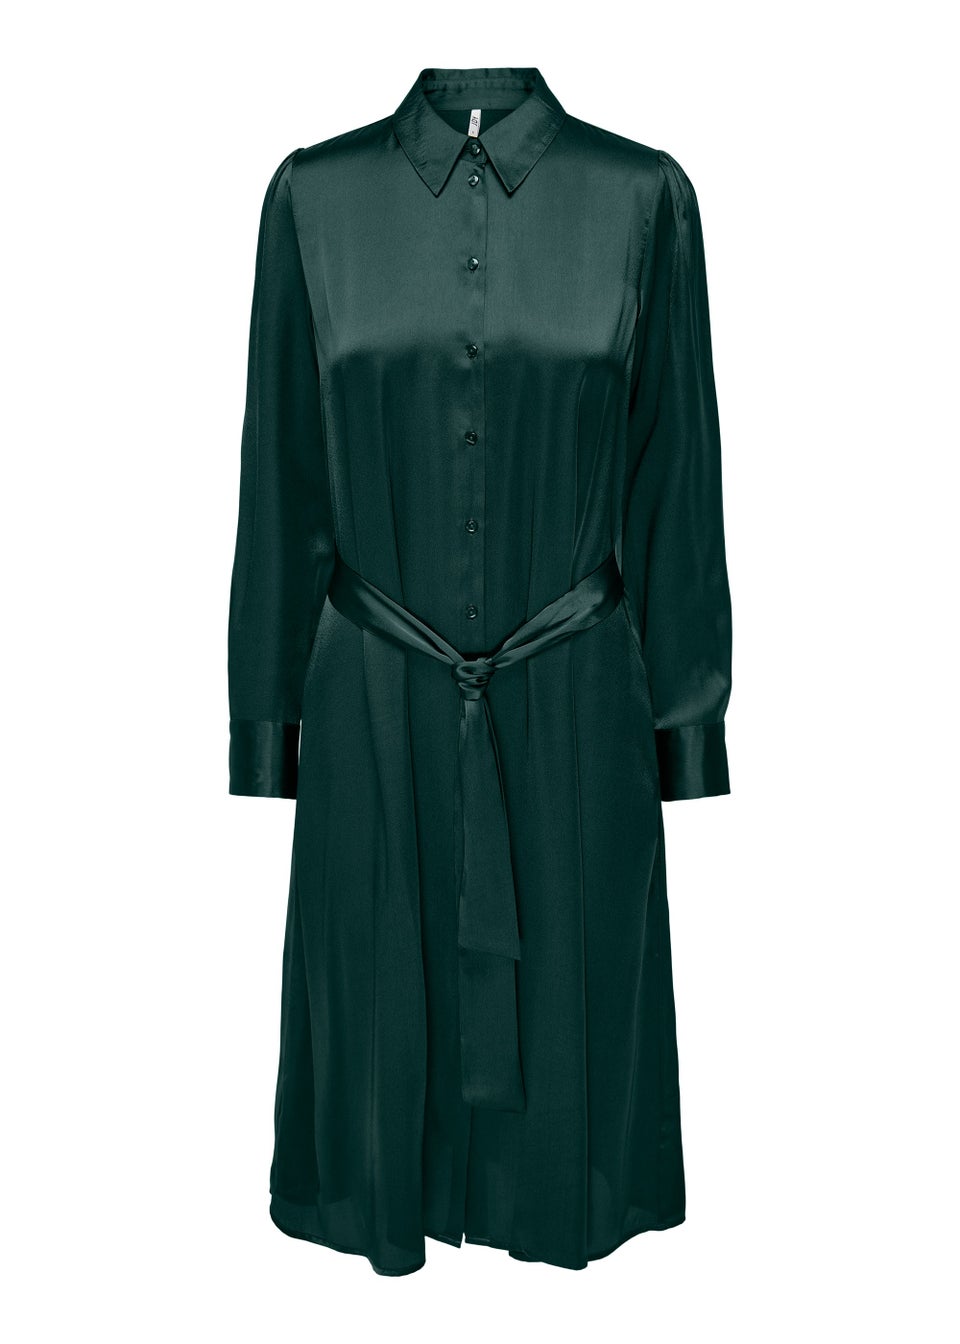 JDY Fifi Green Long Sleeve Midi Shirt Dress